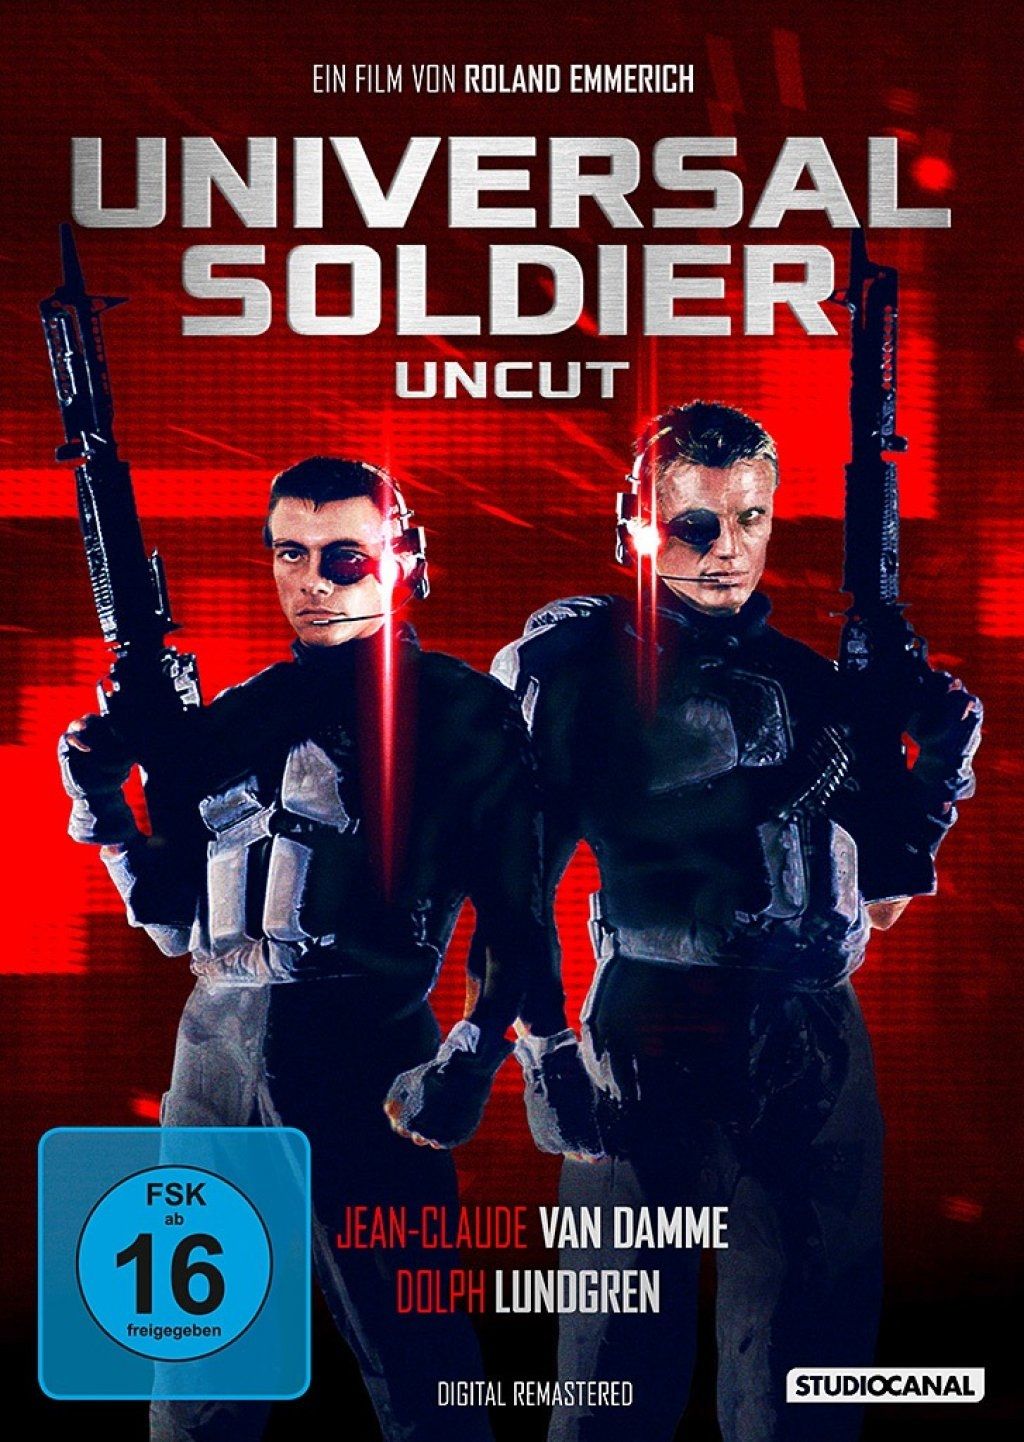 Universal Soldier (Uncut) (Digital Remastered)